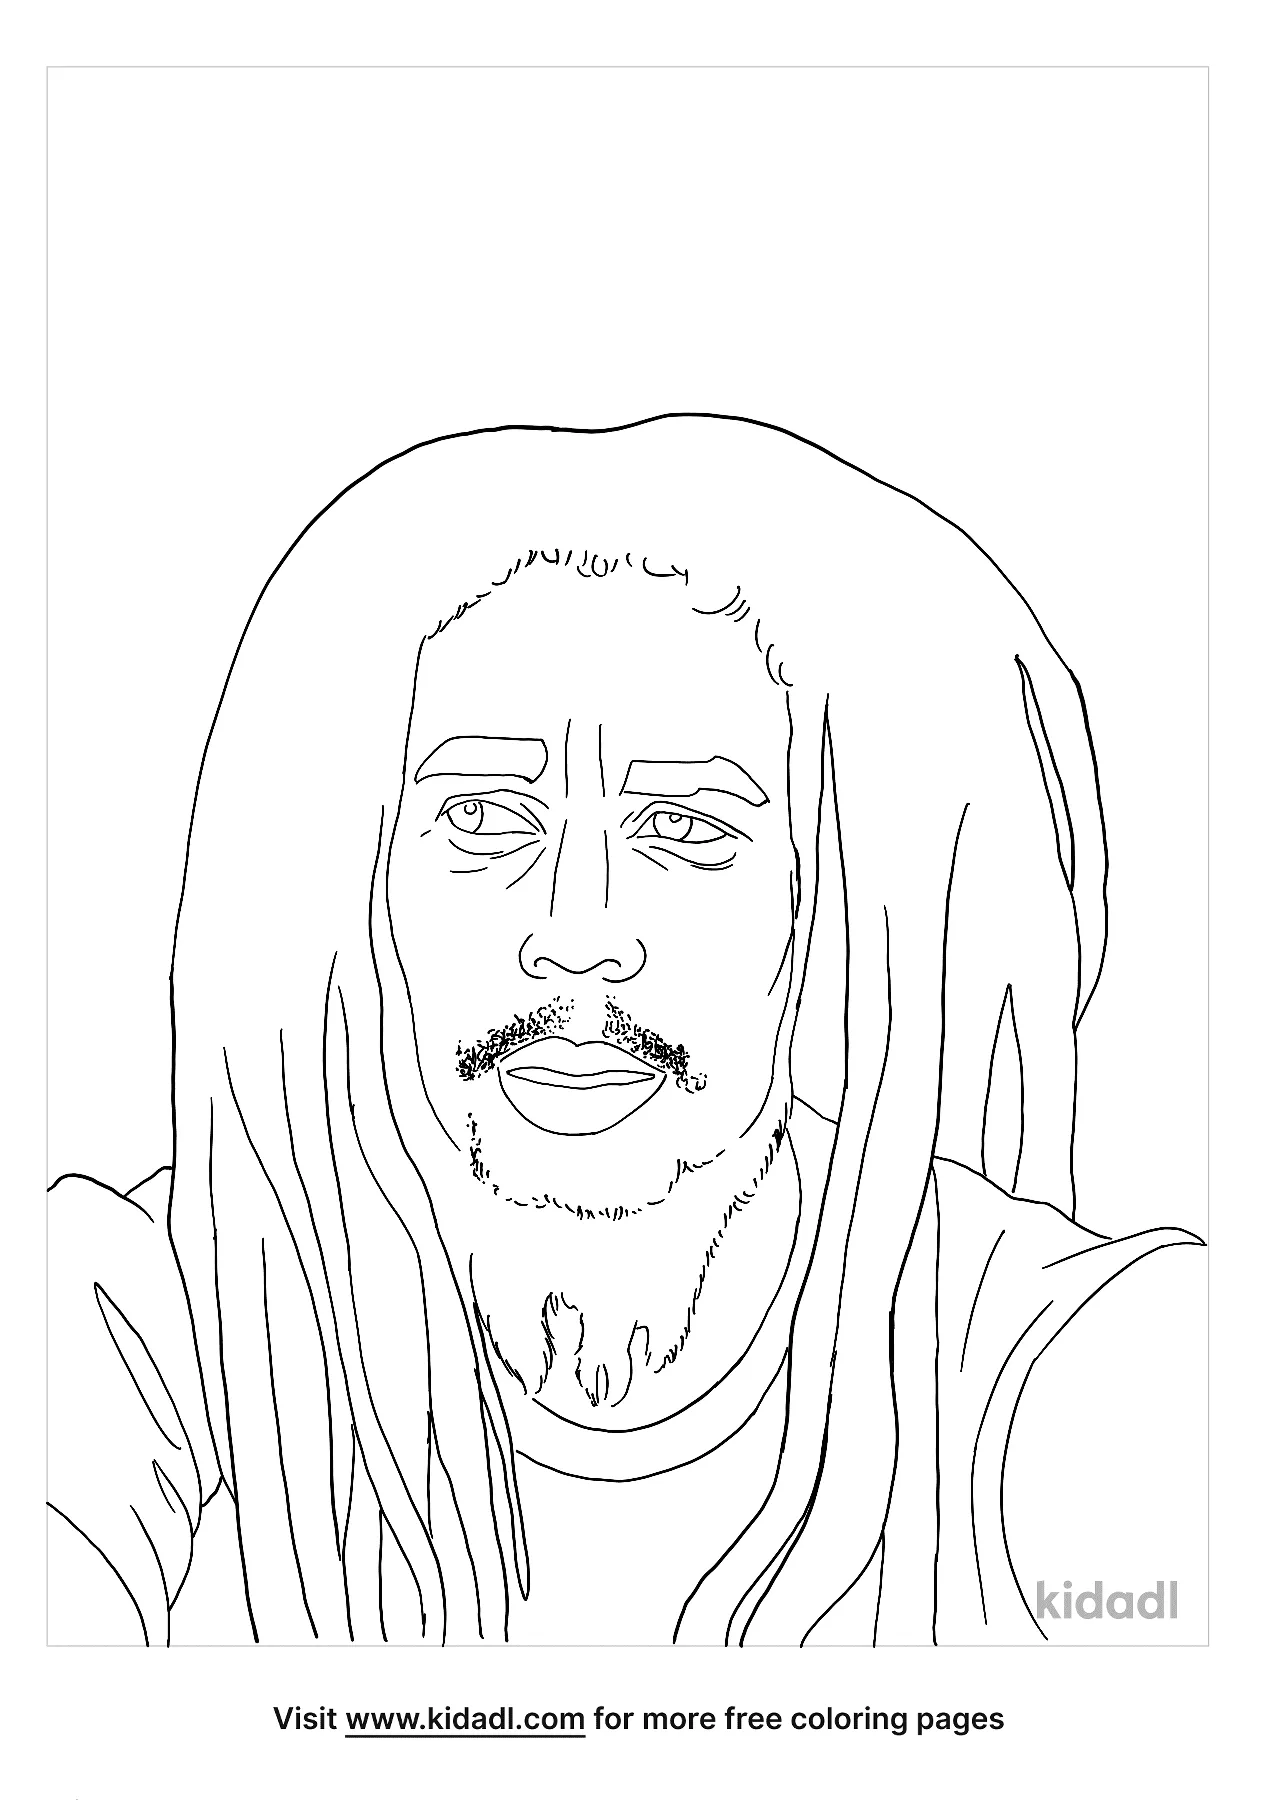 Free Bob Marley Coloring Page | Coloring Page Printables | Kidadl